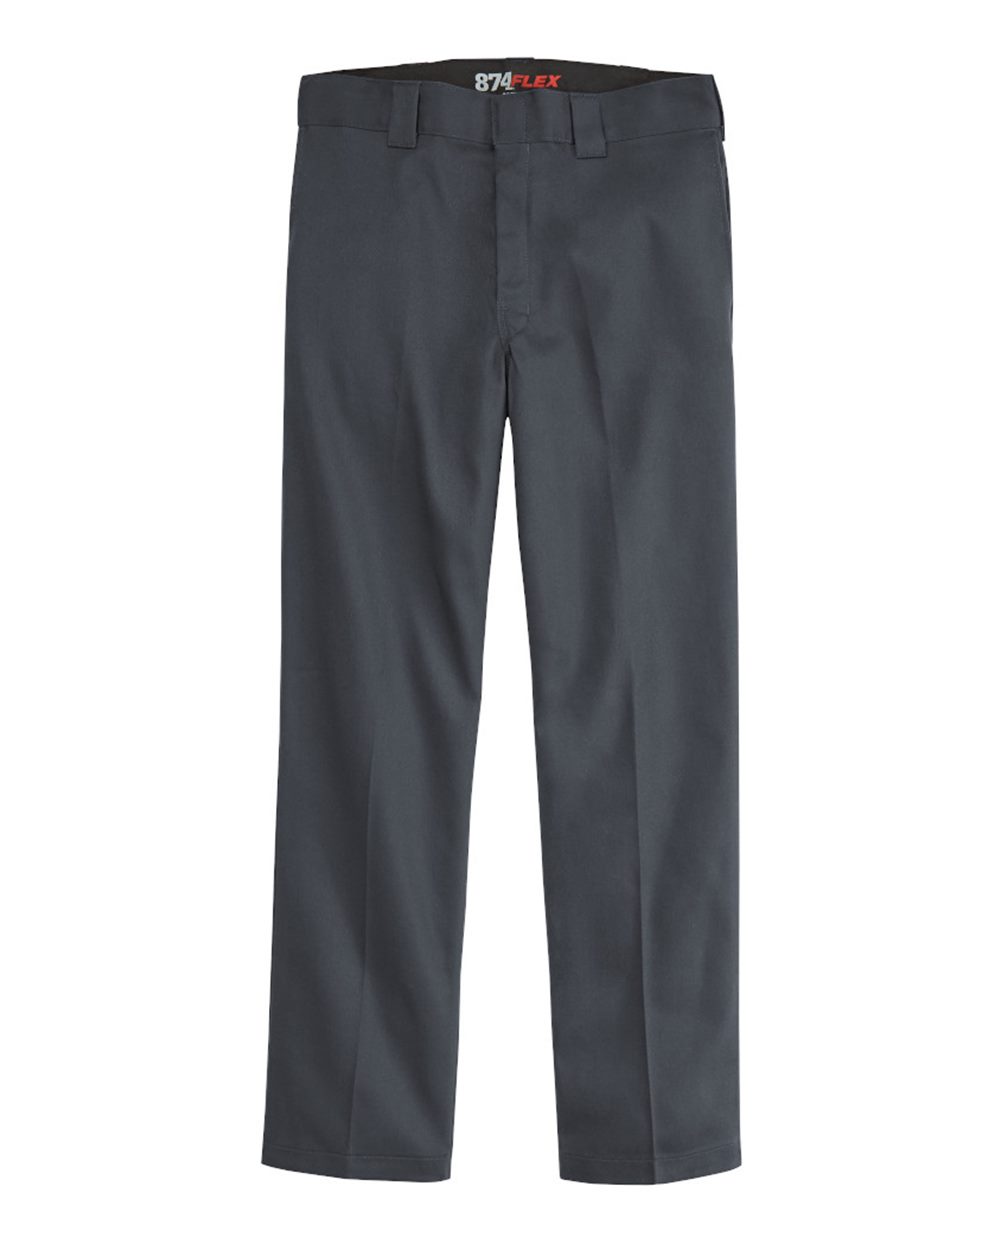 874® Flex Work Pants - Extended Sizes-Dickies